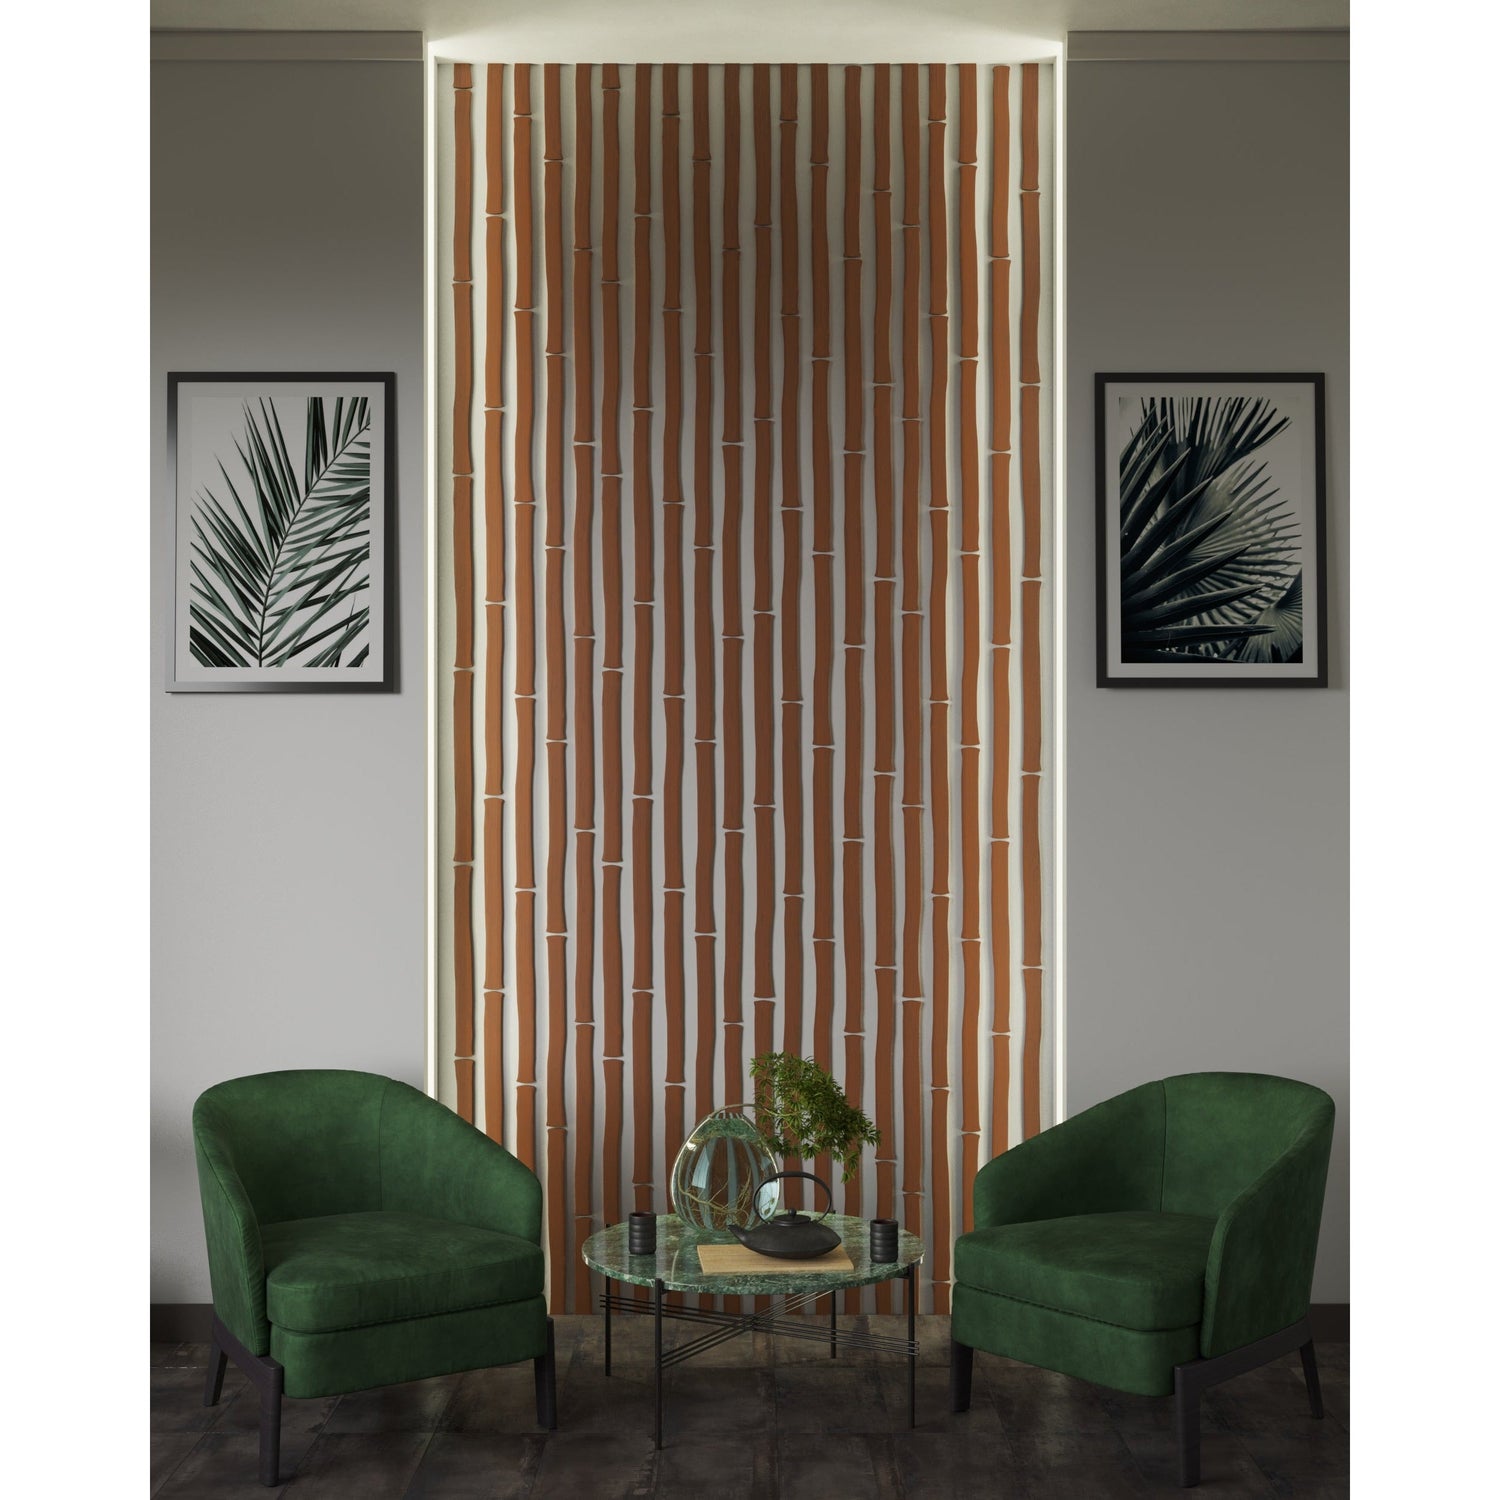 Walnut Bamboo Panel Wall Slats, 24 pcs in box. Artvoom Wall Decor - Artvoom